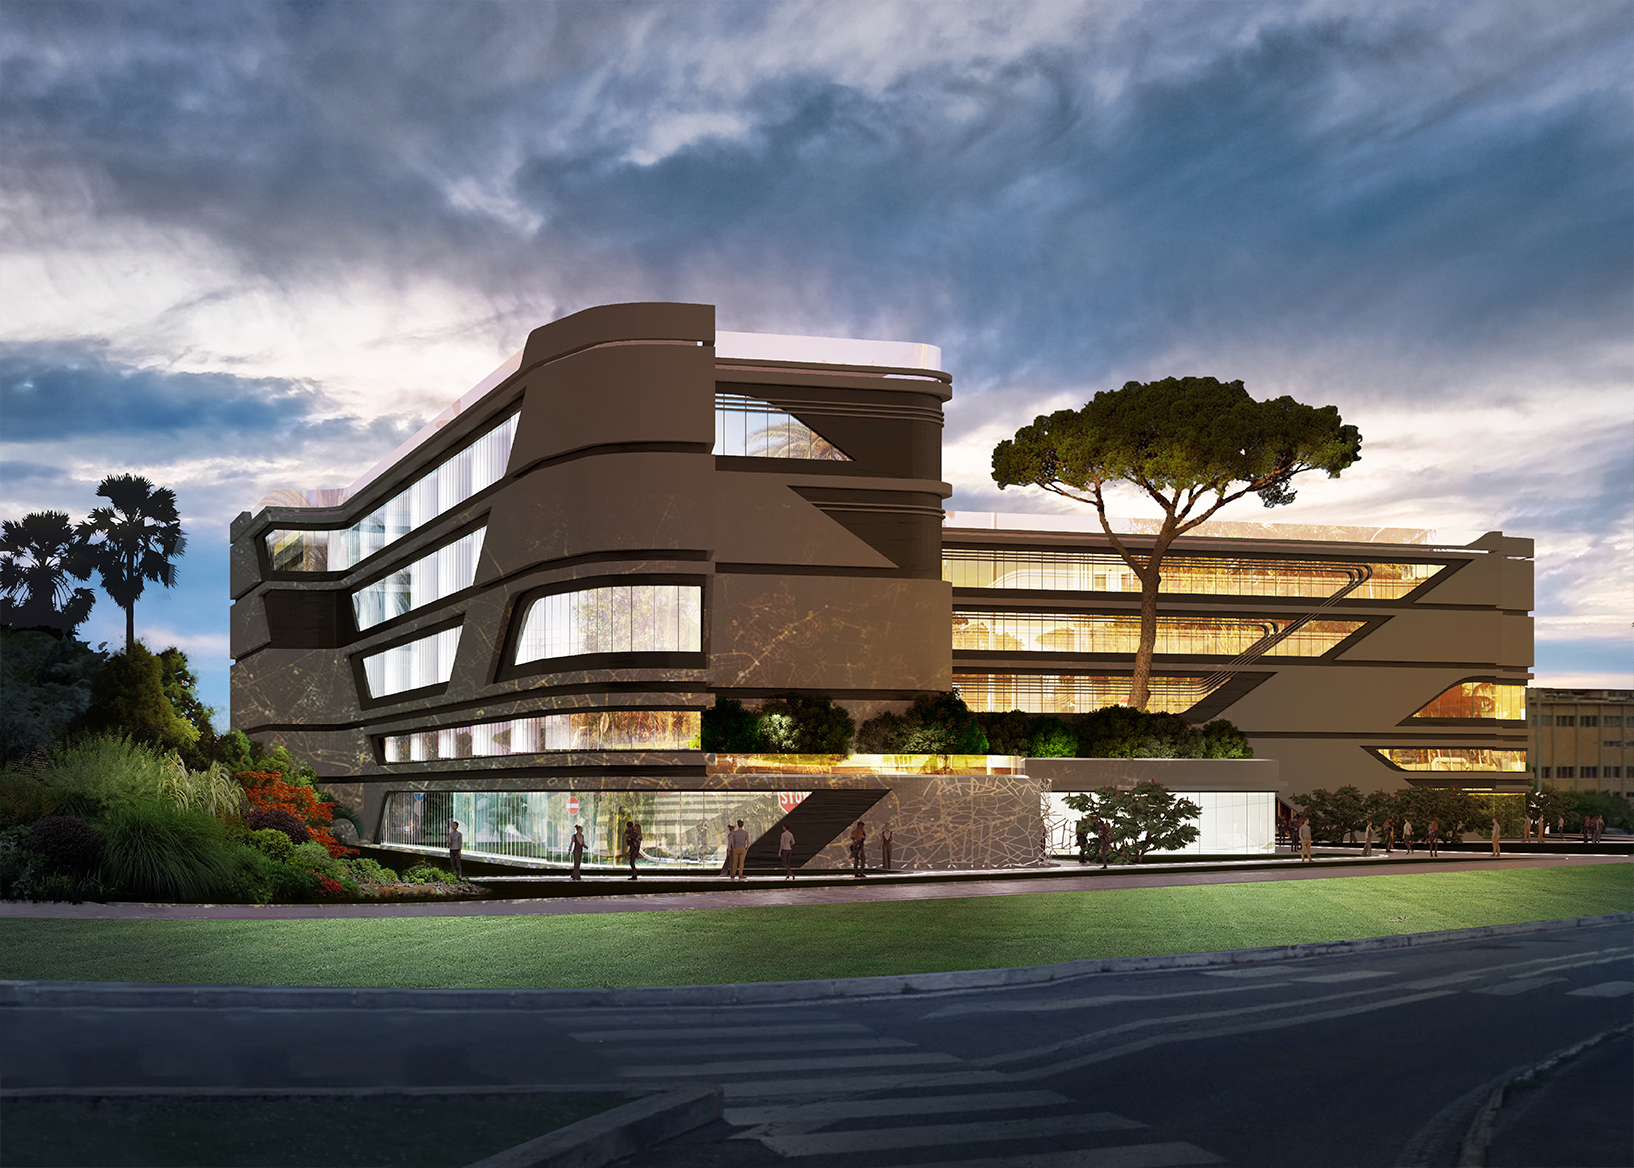 Gemelli Private Hospital, Binini Partners, Società di architettura e ingegneria